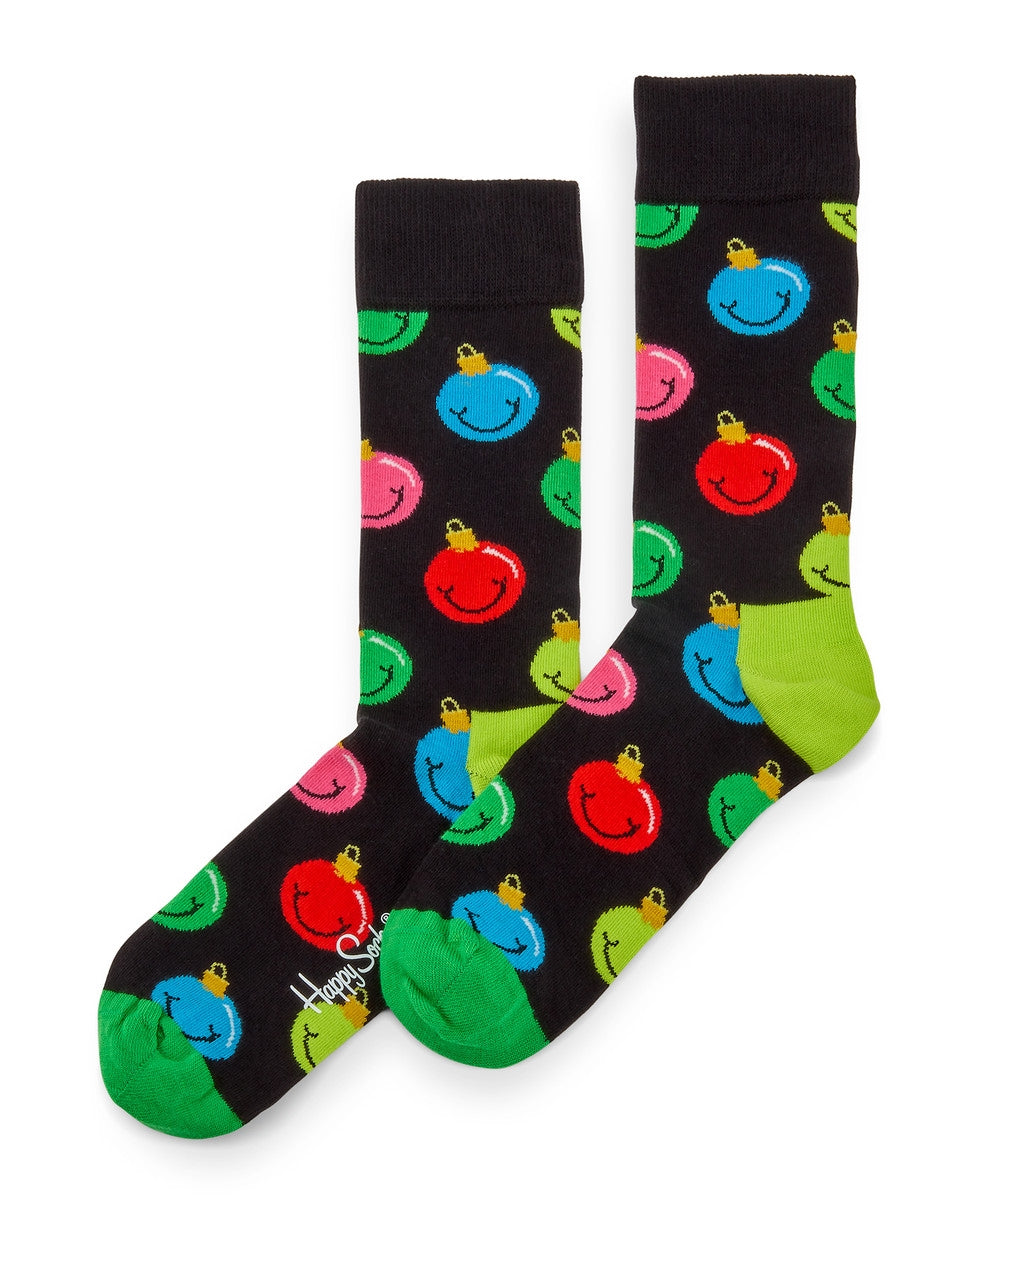 Jingle Smiley socks